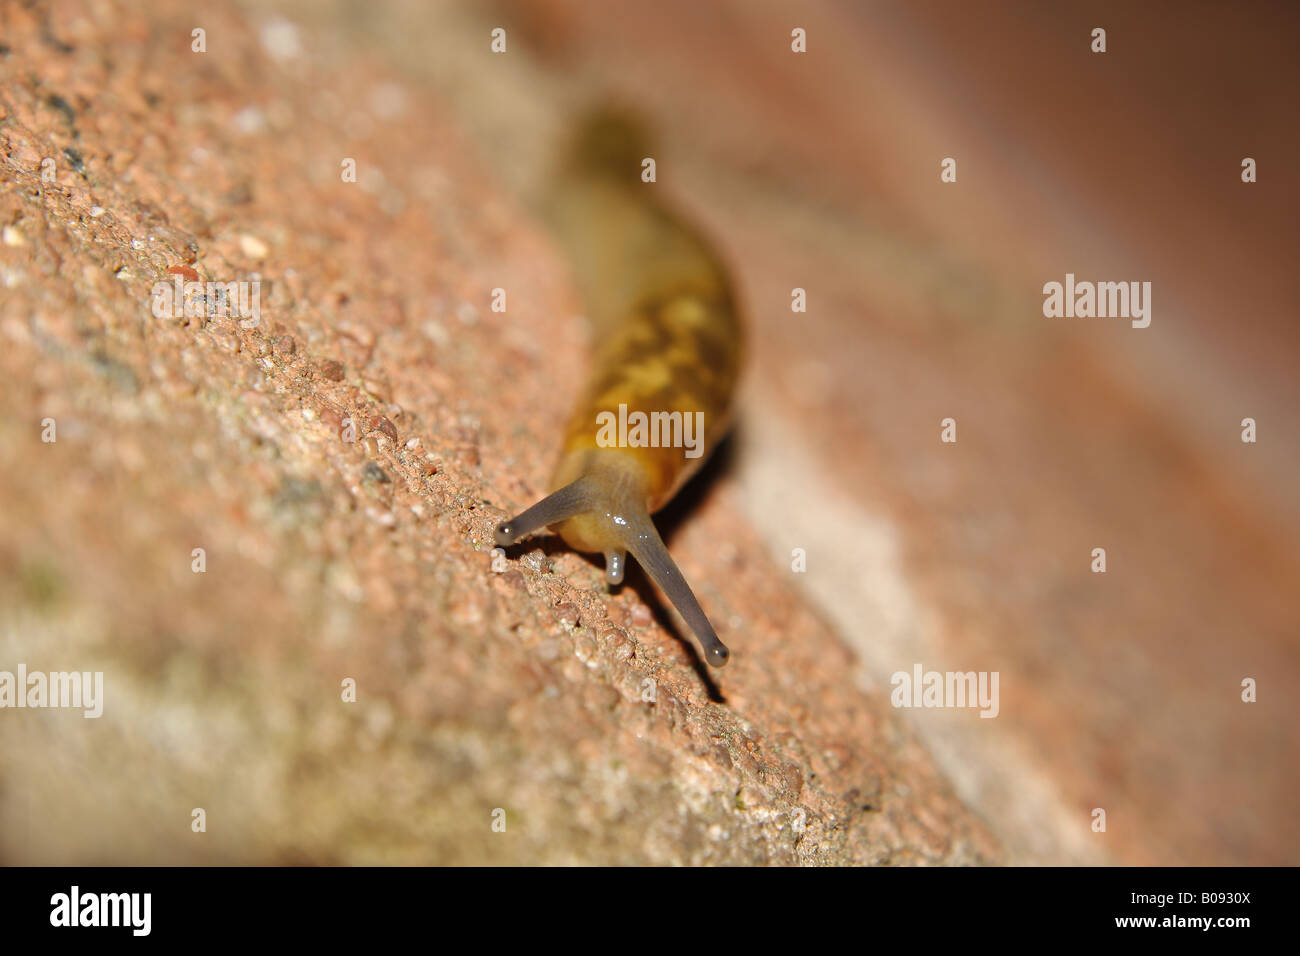 slug on wall Arion sp Stock Photo